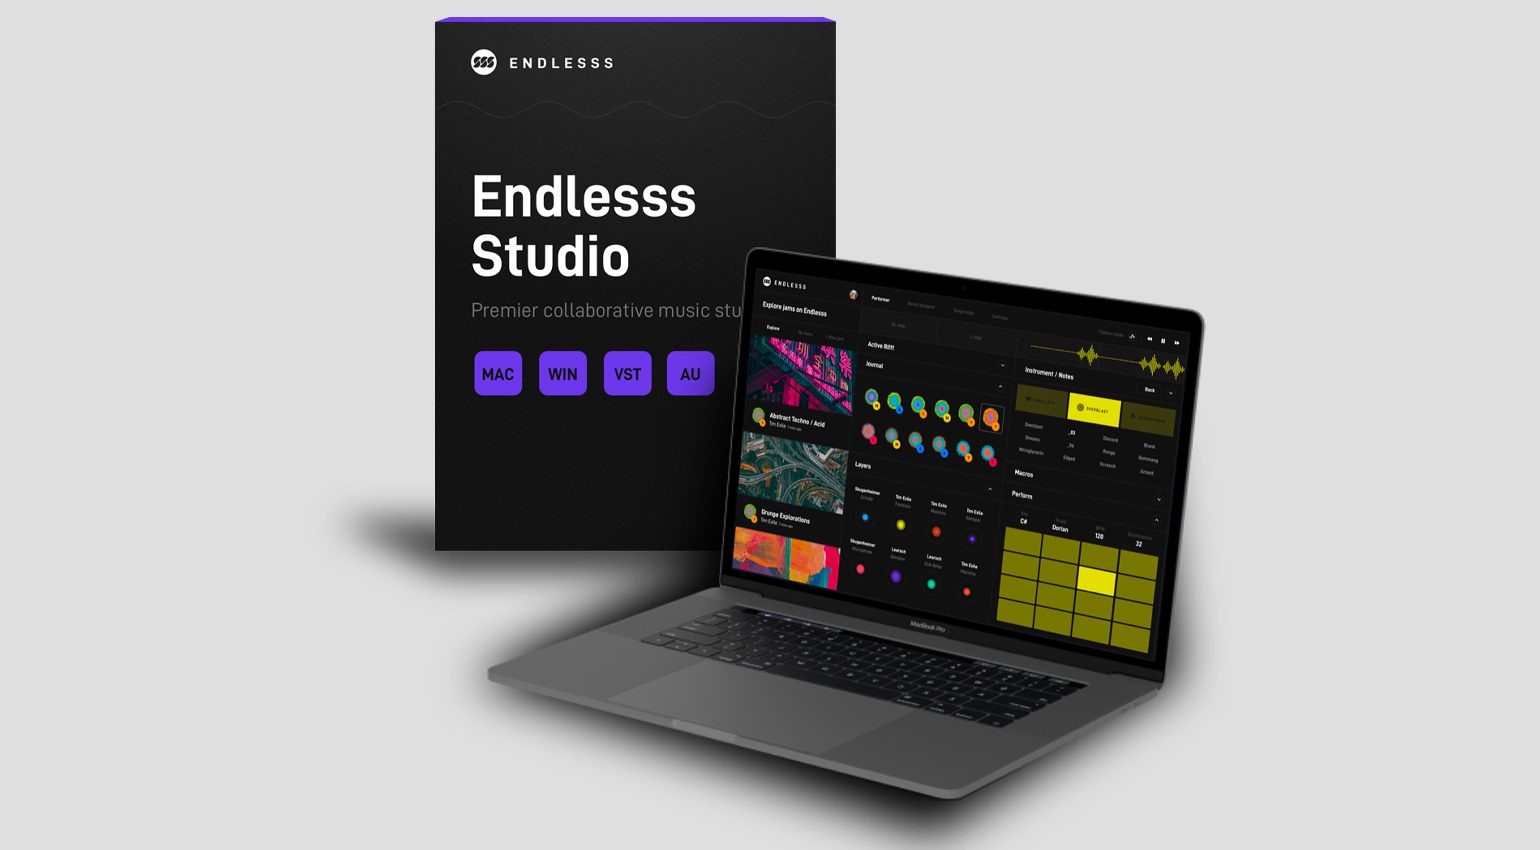 Endlesss Studio